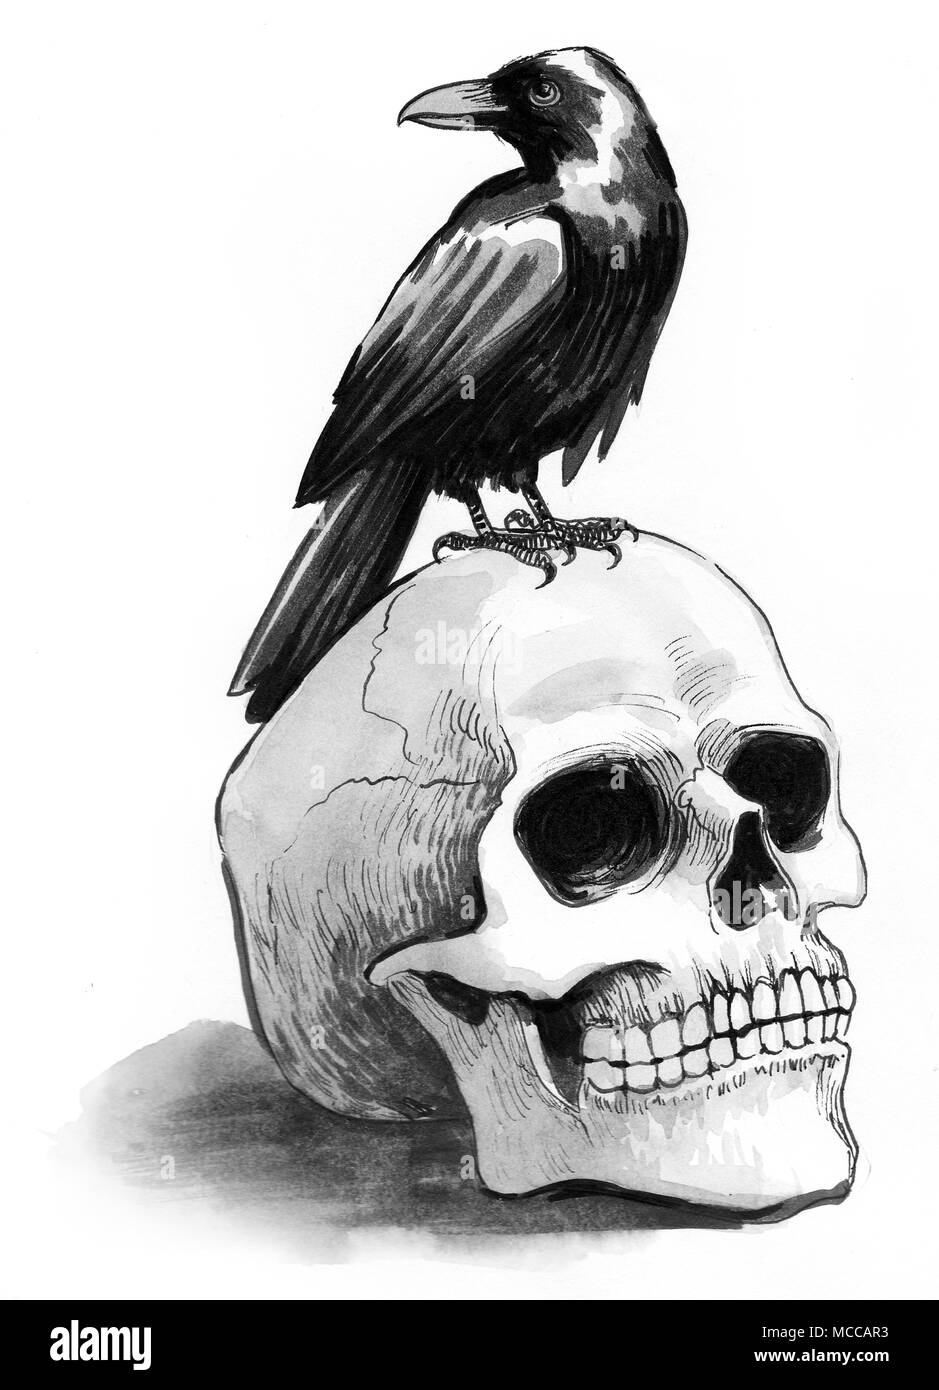 Black raven sitting on a human skull Stock Photo